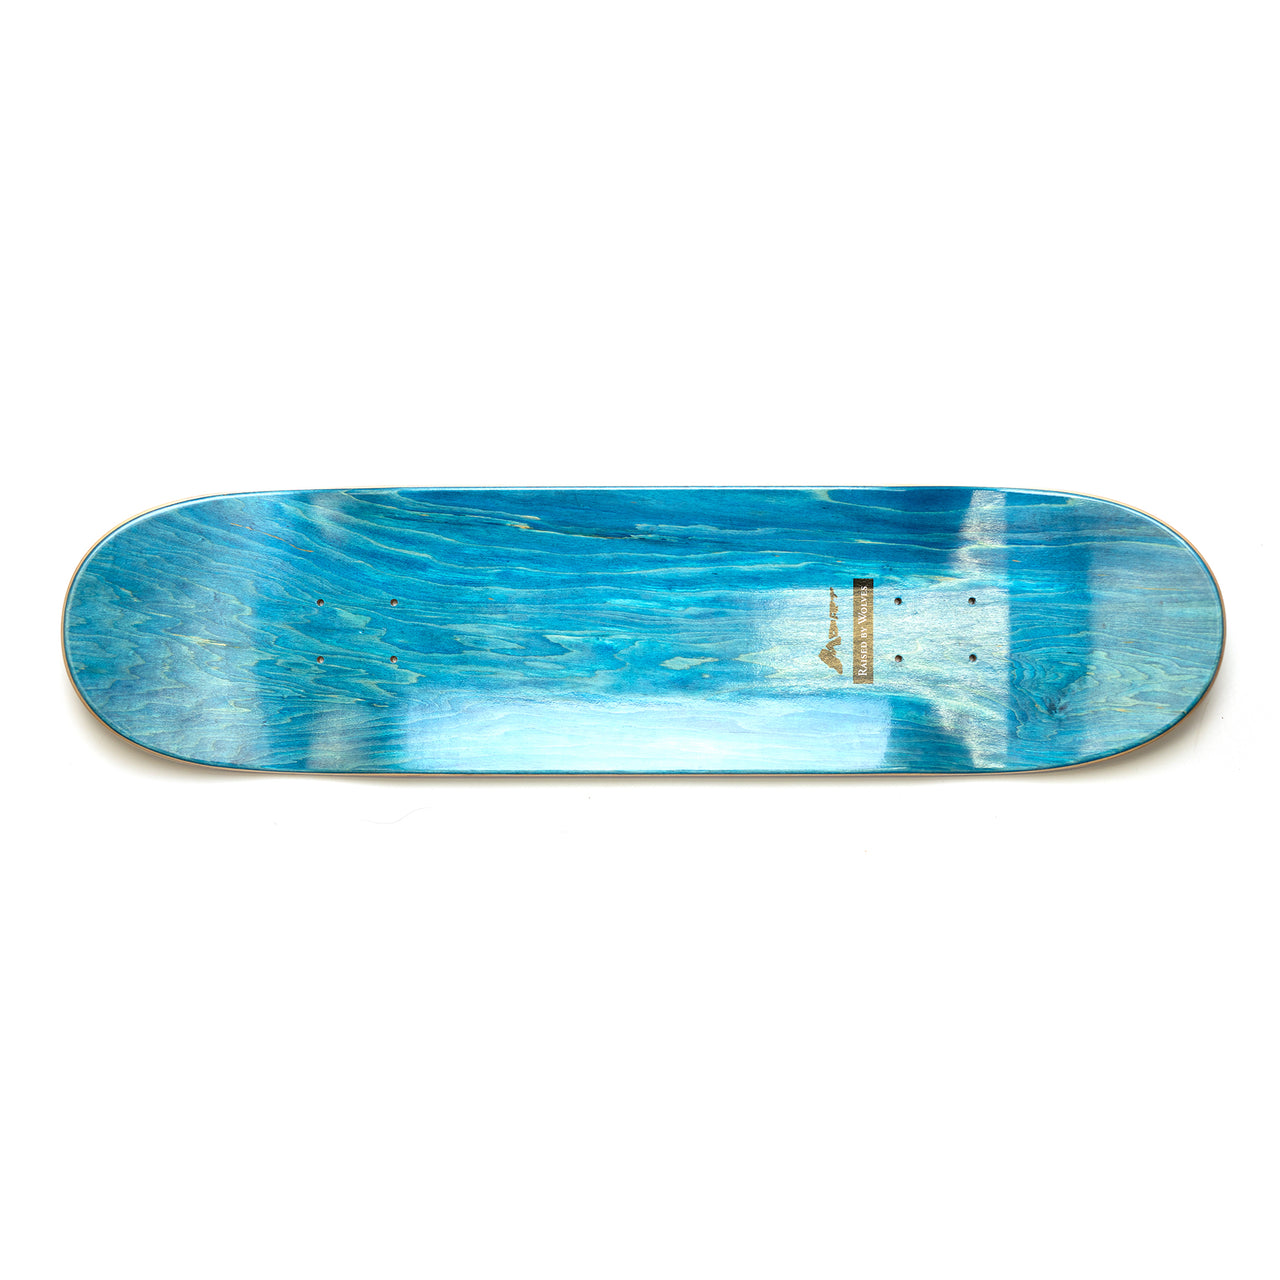 Mort 8.25" Skateboard Deck - Maroon/Blue